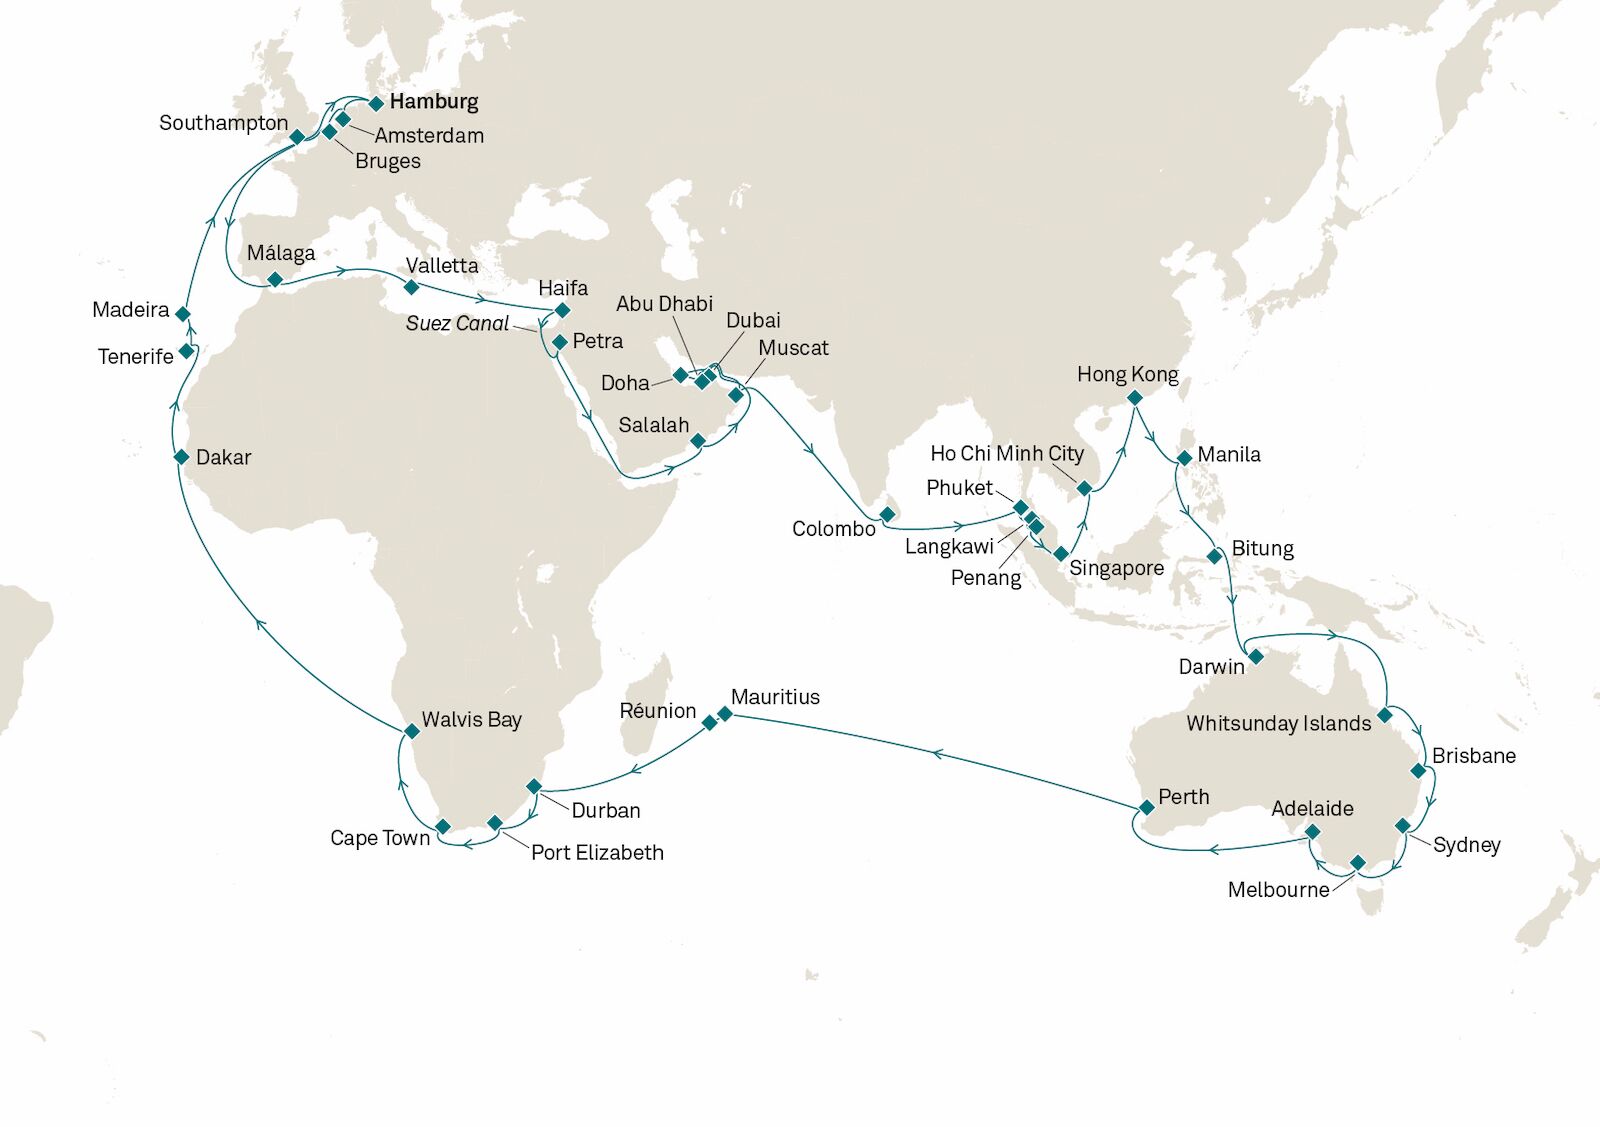 Around-the-world cruise by Cunard